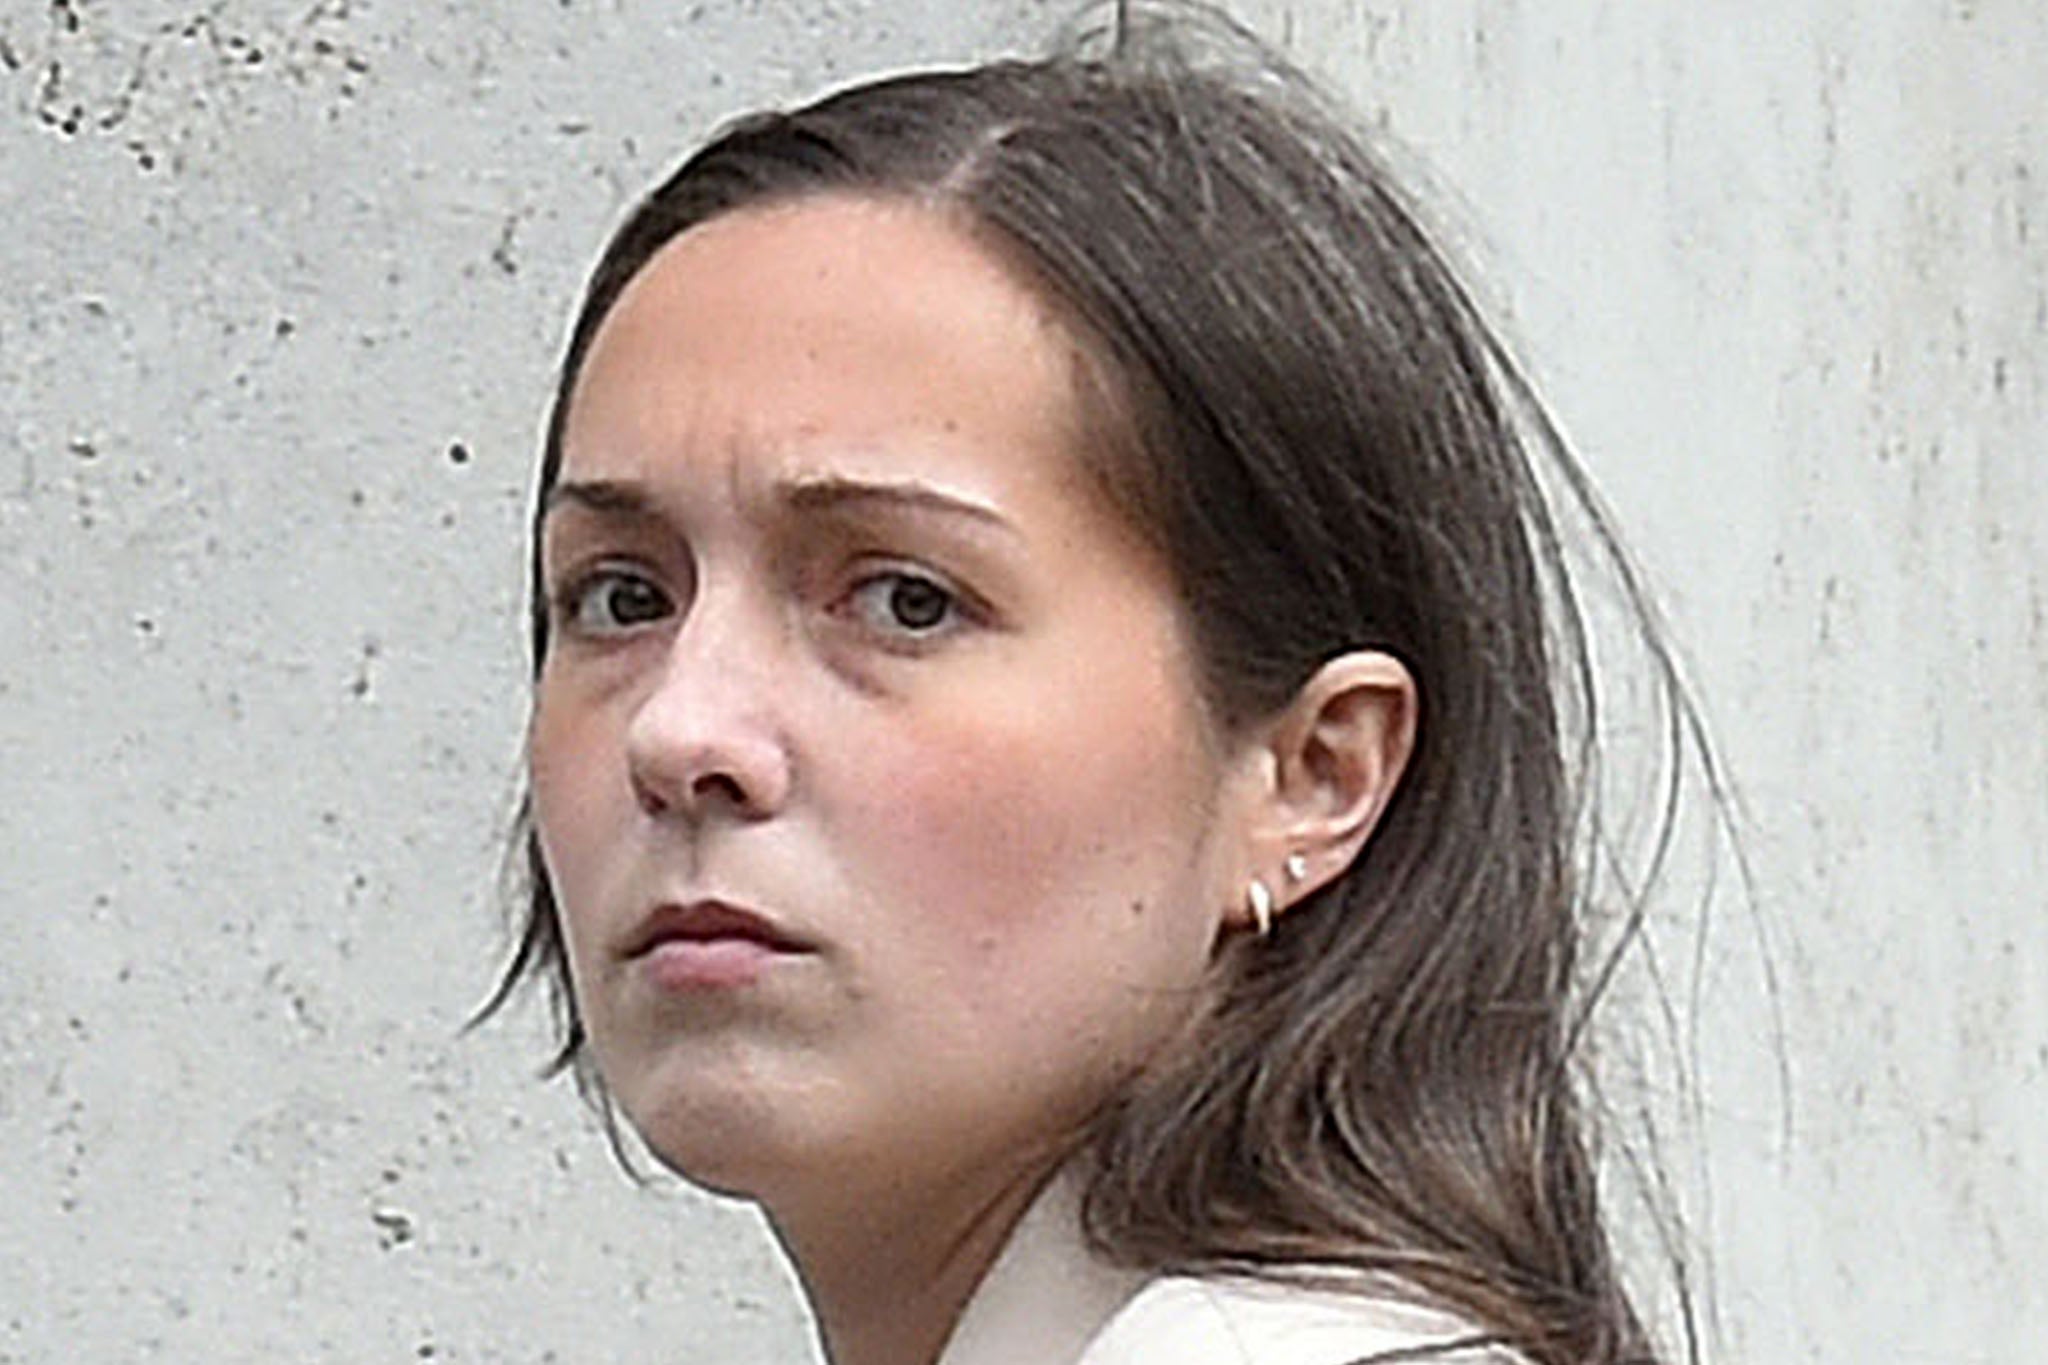 Rebecca Joynes, 30, denies sexual activity with two teenage boys